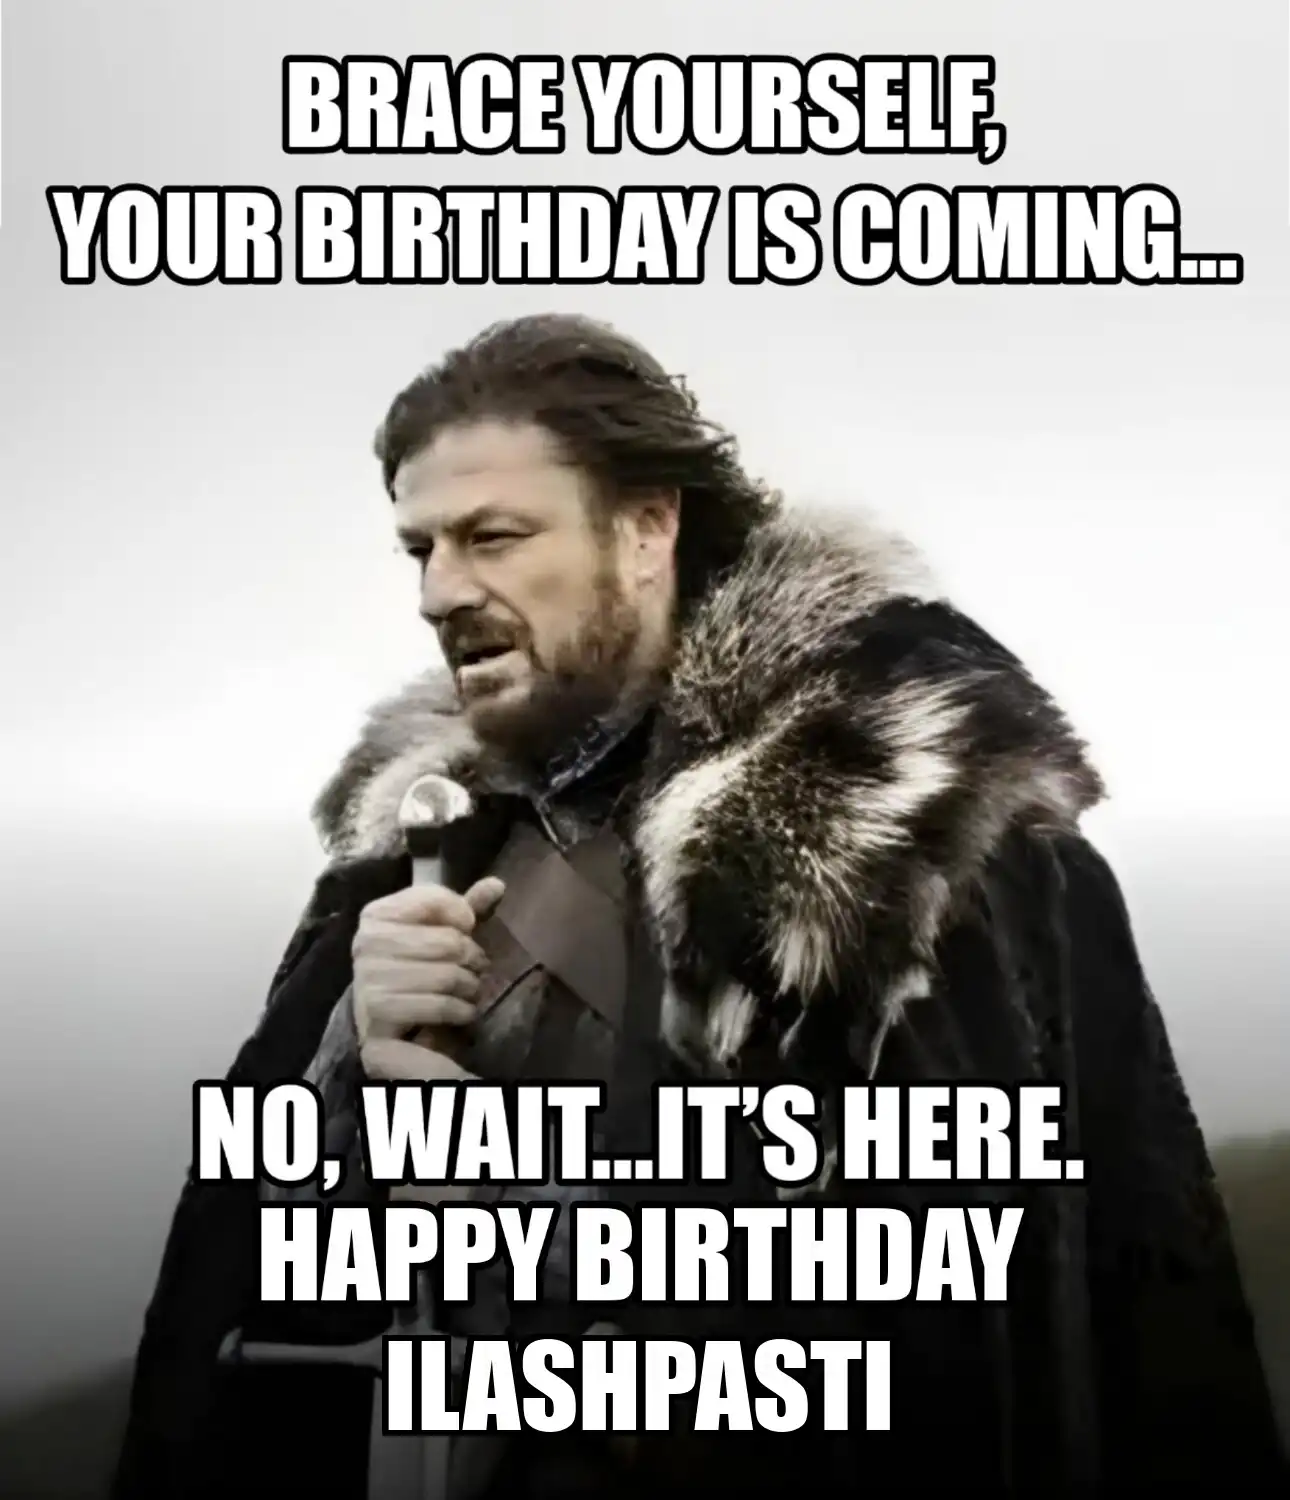 Happy Birthday Ilashpasti Brace Yourself Your Birthday Is Coming Meme